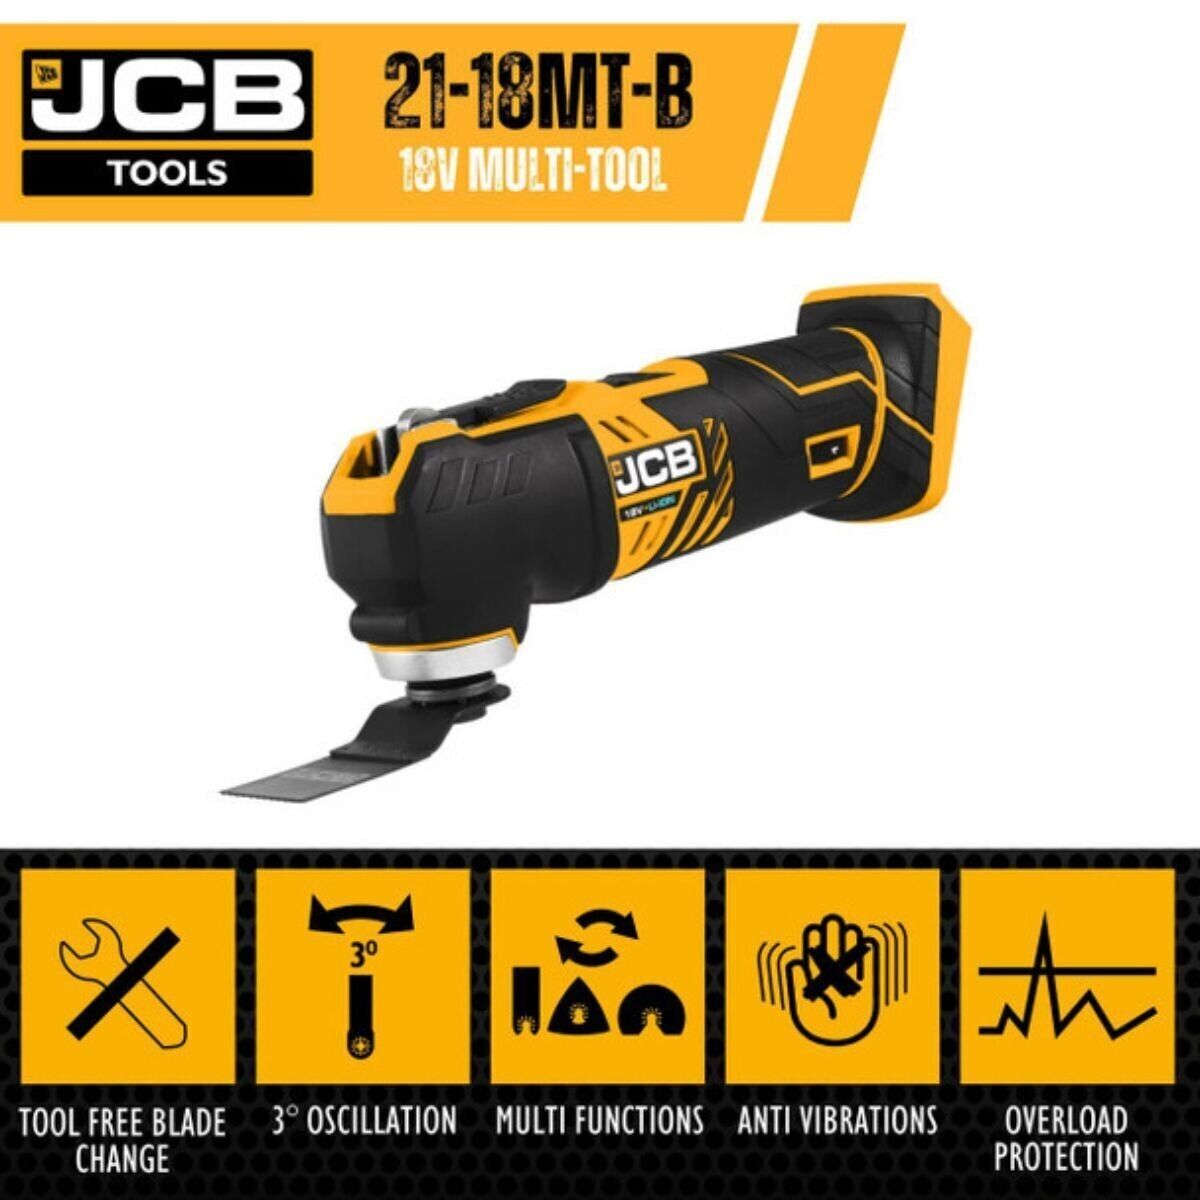 JCB 21-18MT-B 18V Cordless Multi Tool Body Only